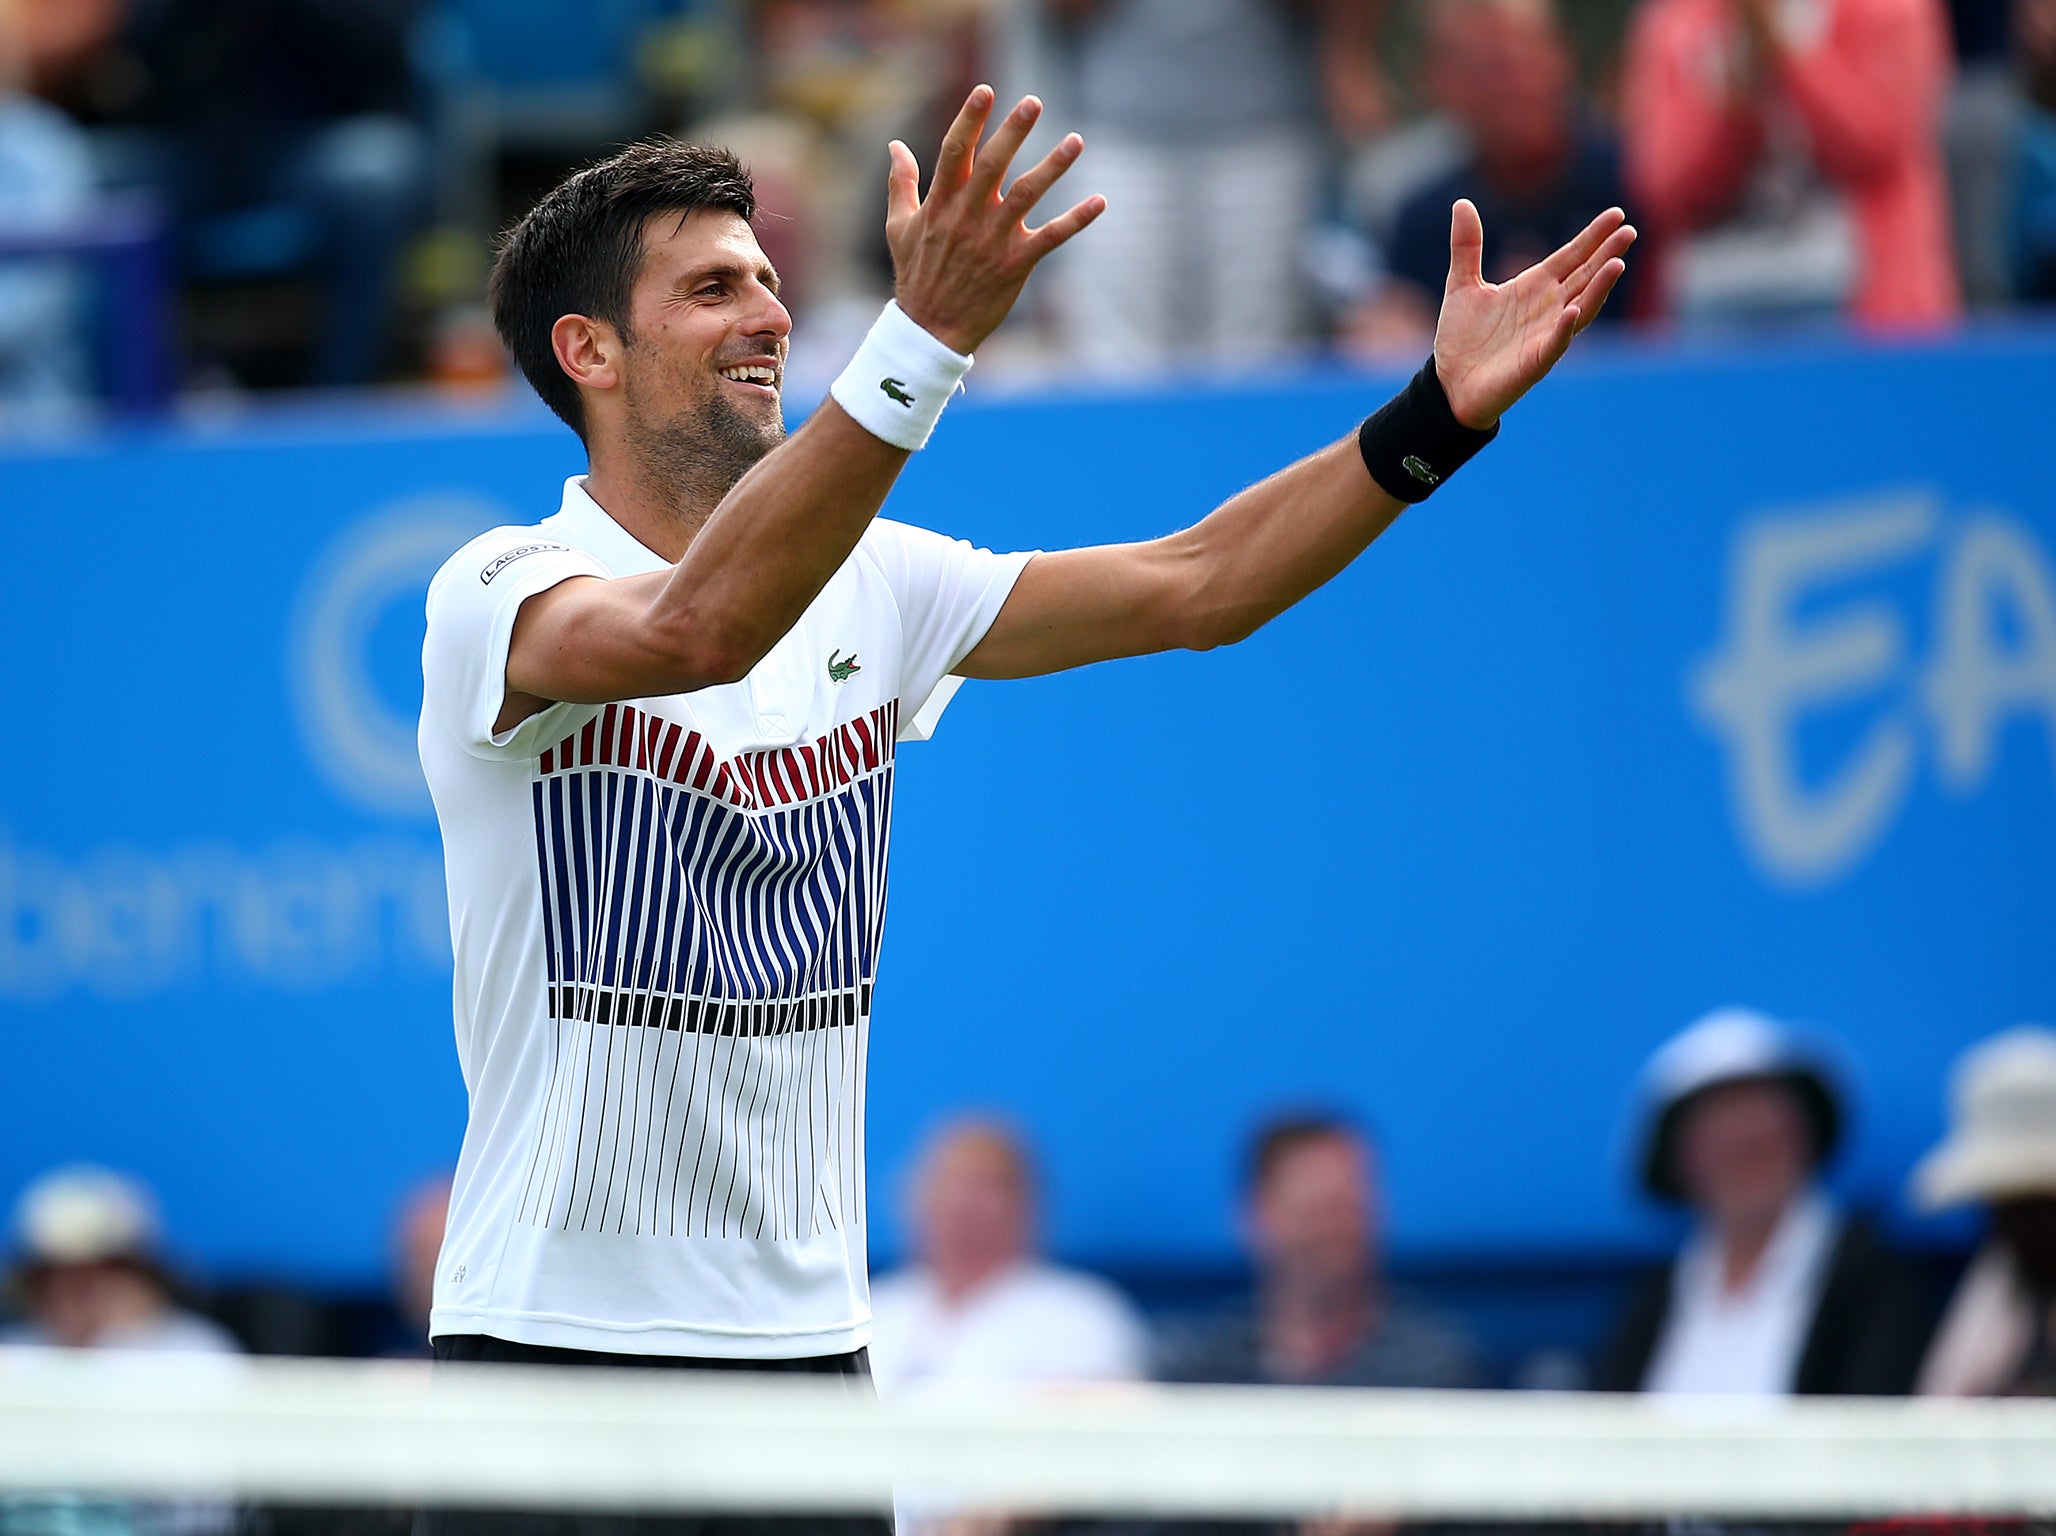 Novak Djokovic is looking forward to making his return